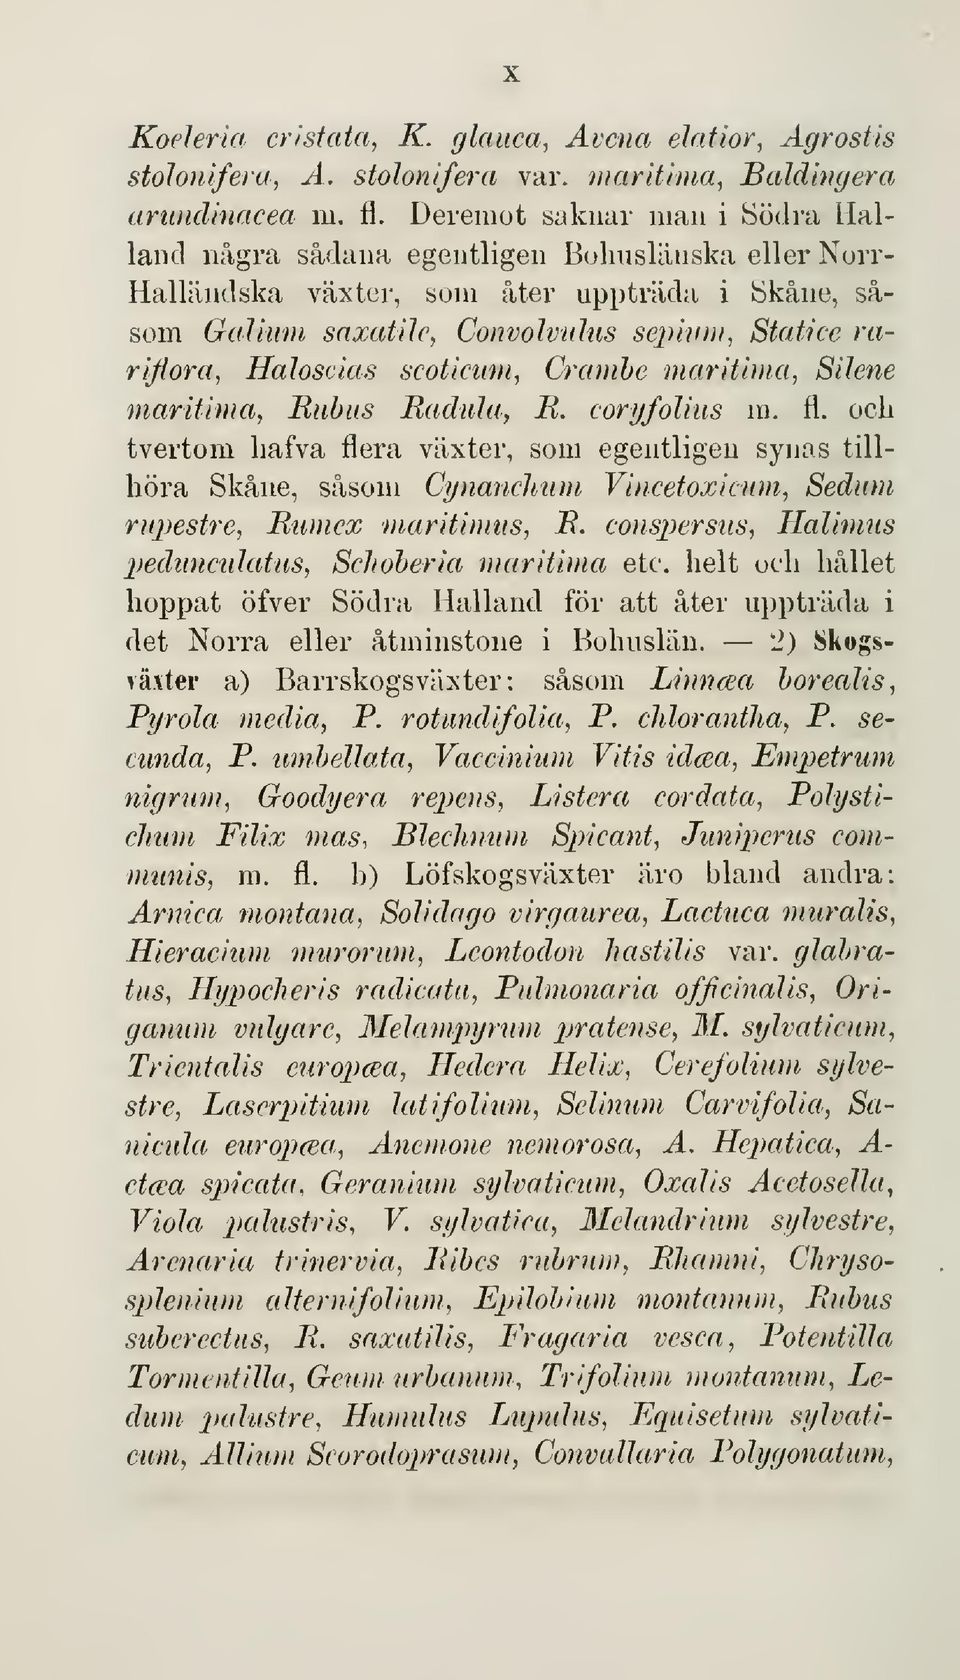 Haloscias scotinmt, Cranibe maritima, Silene maritima, Ruhus Radiila, R. coryfoliiis va. fl.